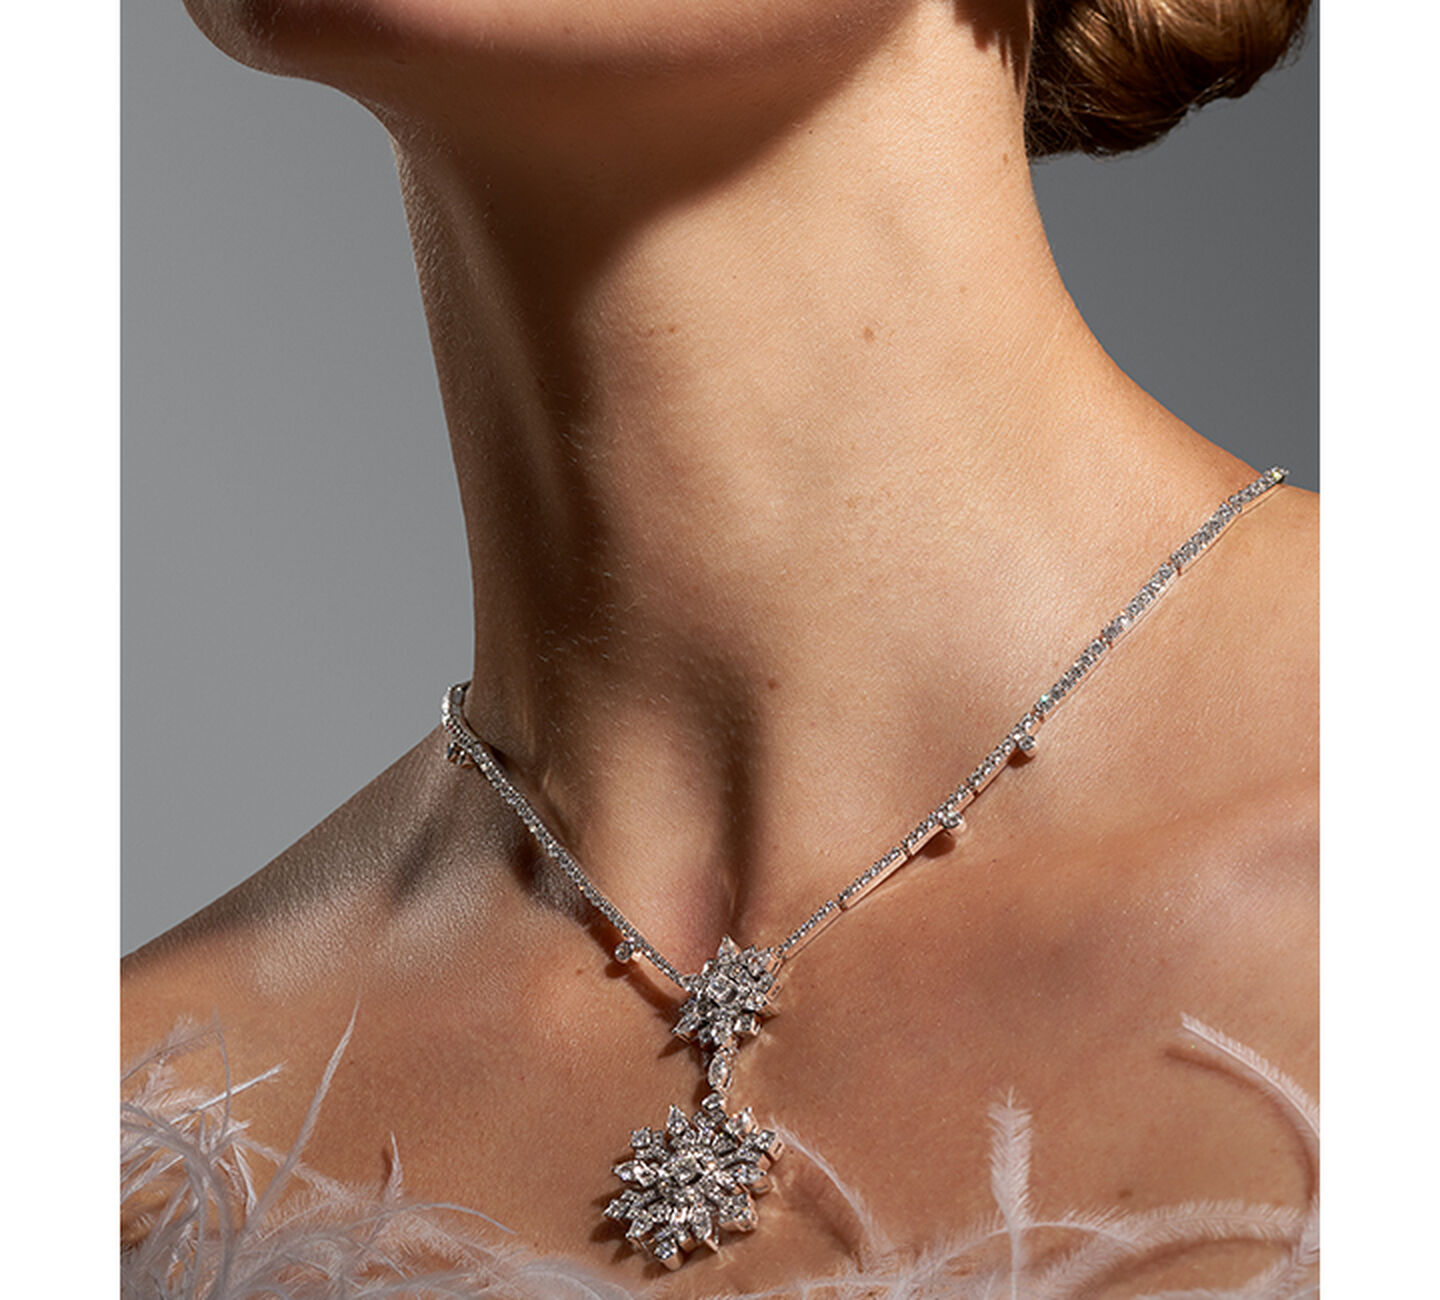 A pair of Snowflake shaped diamond earrings on model